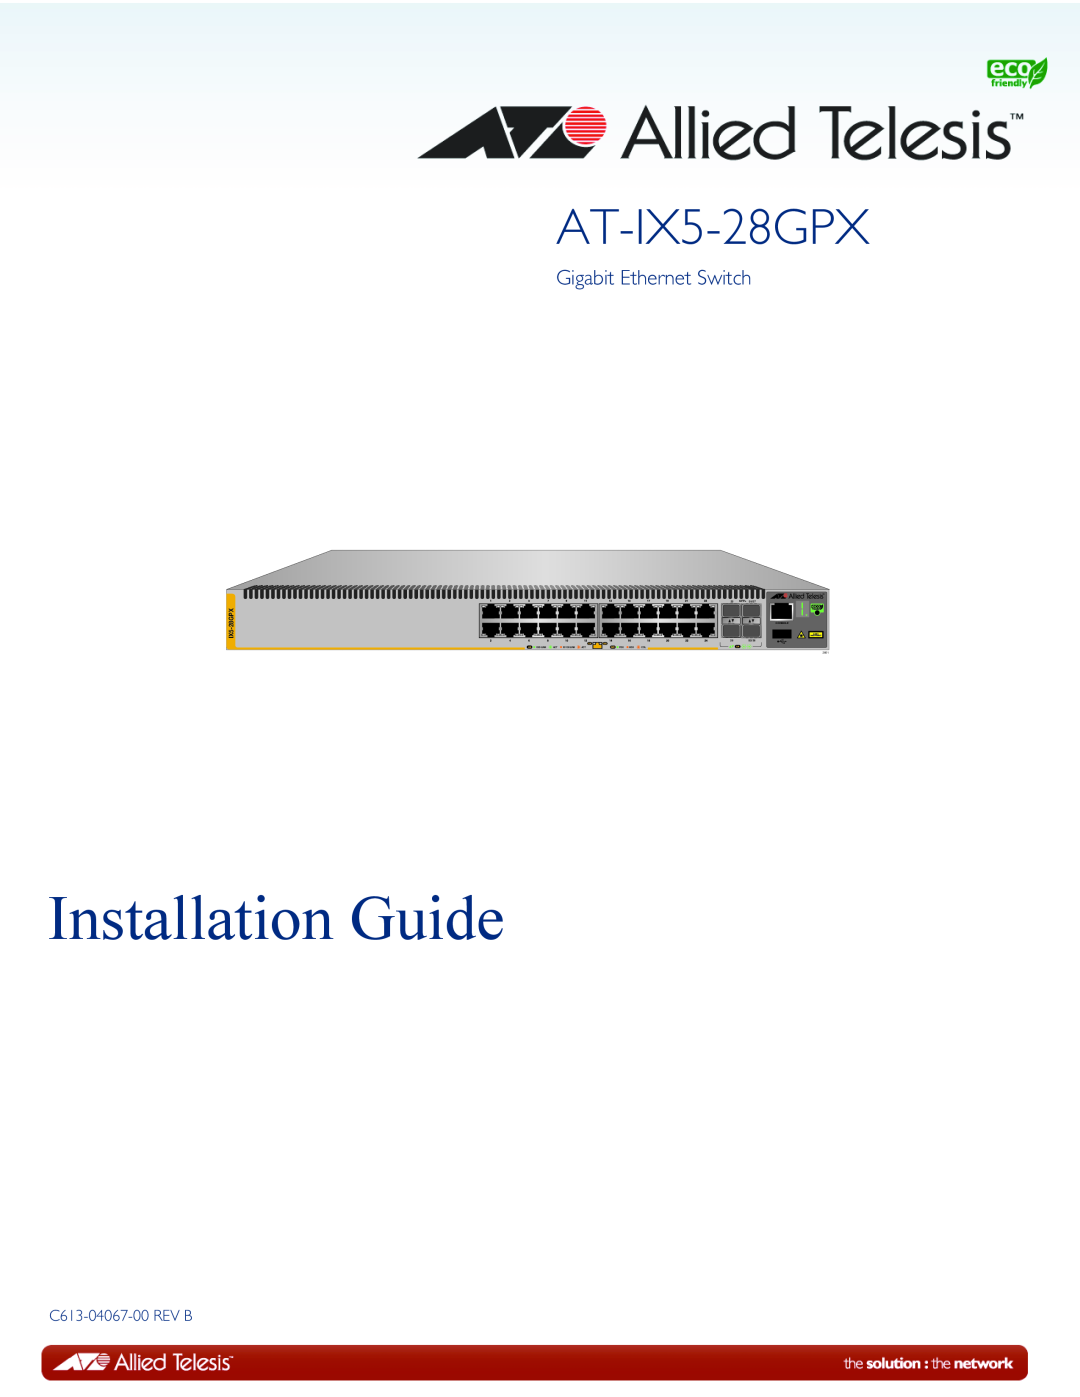 Allied Telesis AT-IX5-28GPX manual Installation Guide, Gigabit Ethernet Switch, C613-04067-00 REV B, Link, 10/100 LINK 